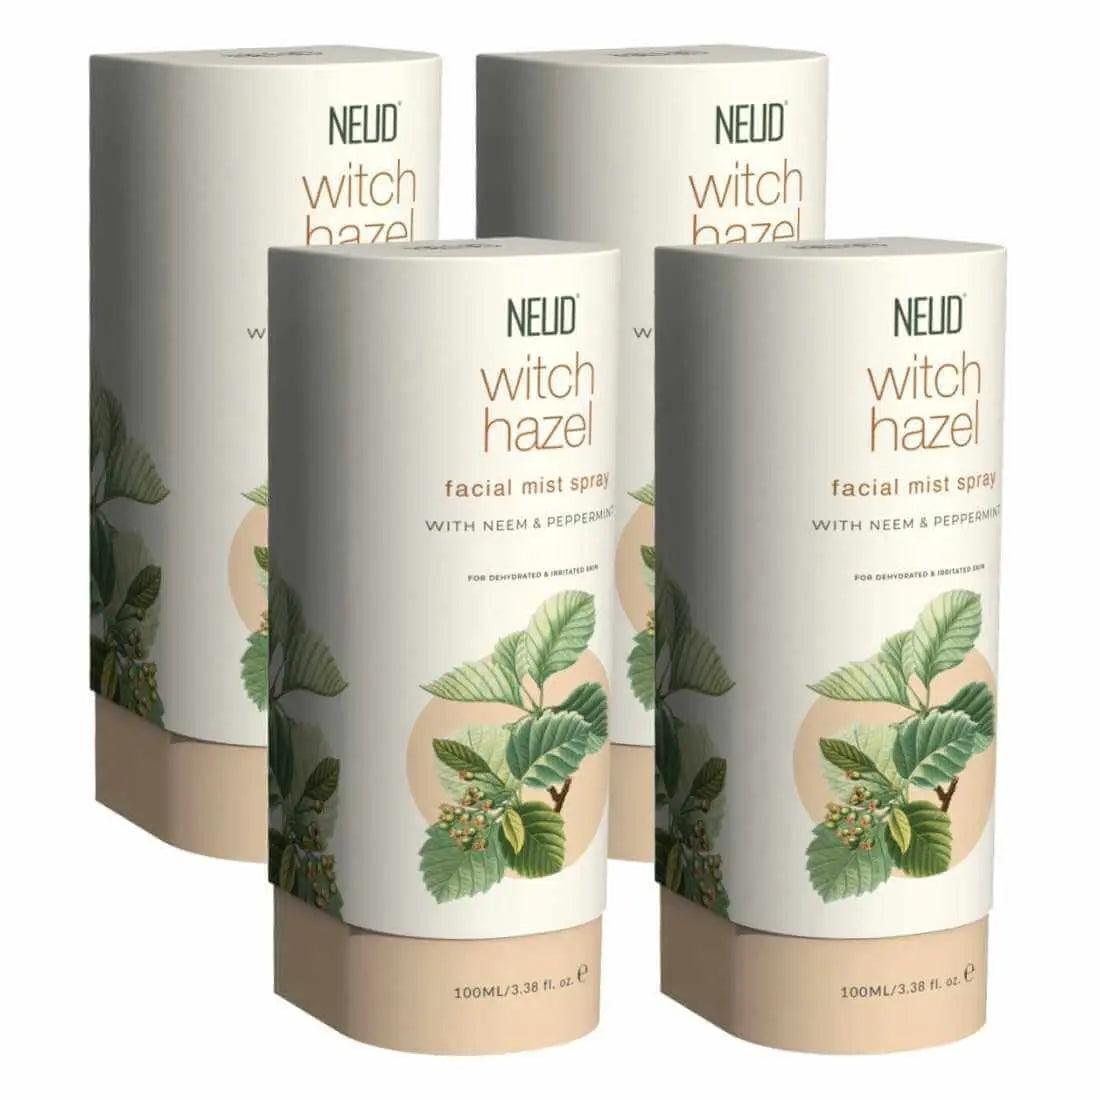 NEUD Witch Hazel Facial Mist Spray For Dehydrated & Irritated Skin - 100 ml 9559682314338